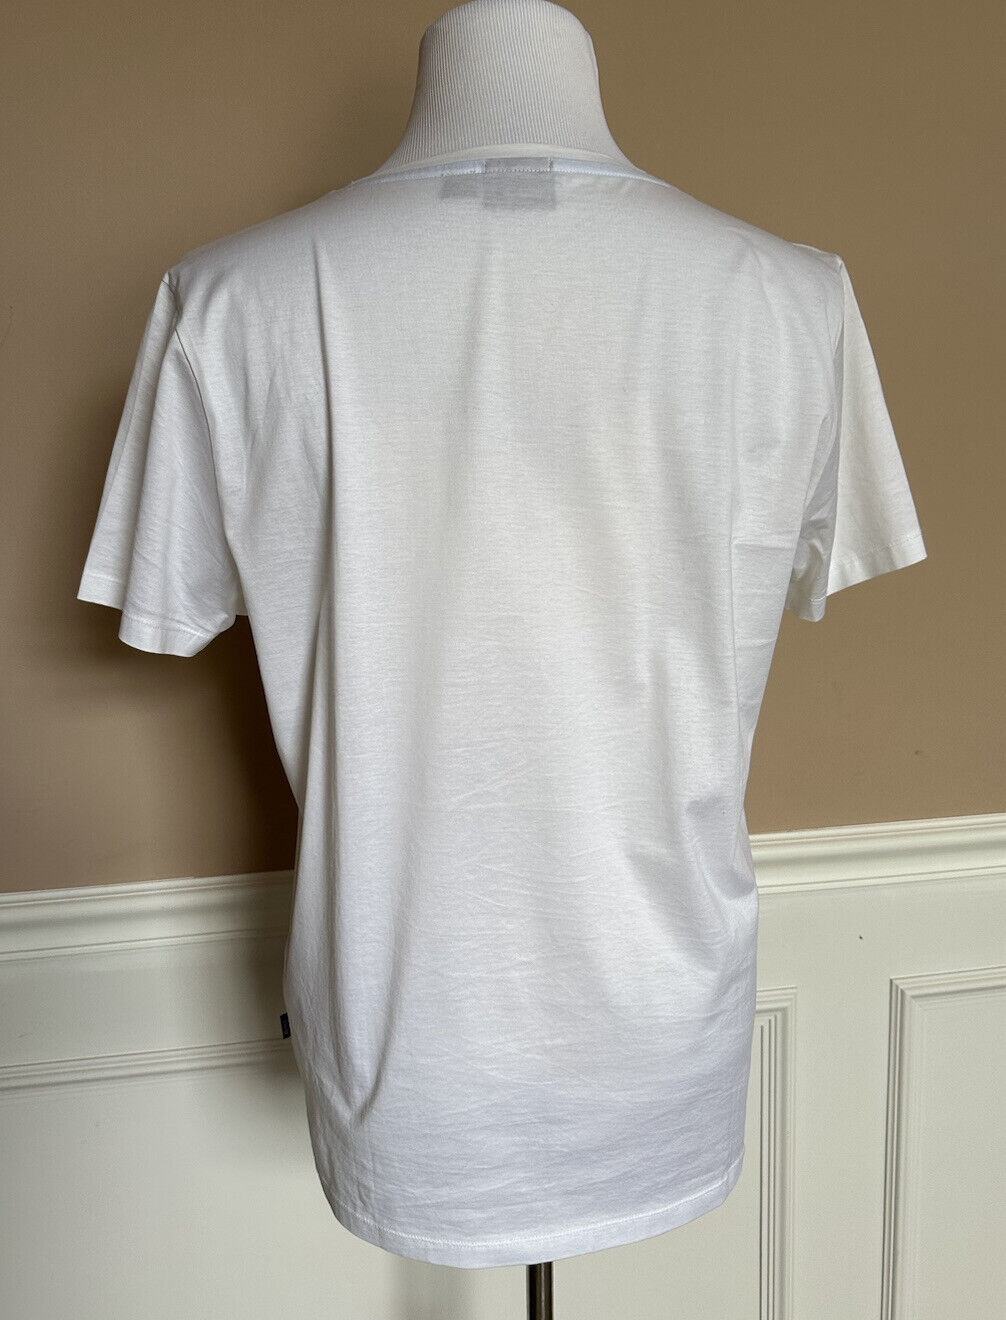 Boss Hugo Boss Black Label V-neck White Cotton T-shirt XL - Slim Fit